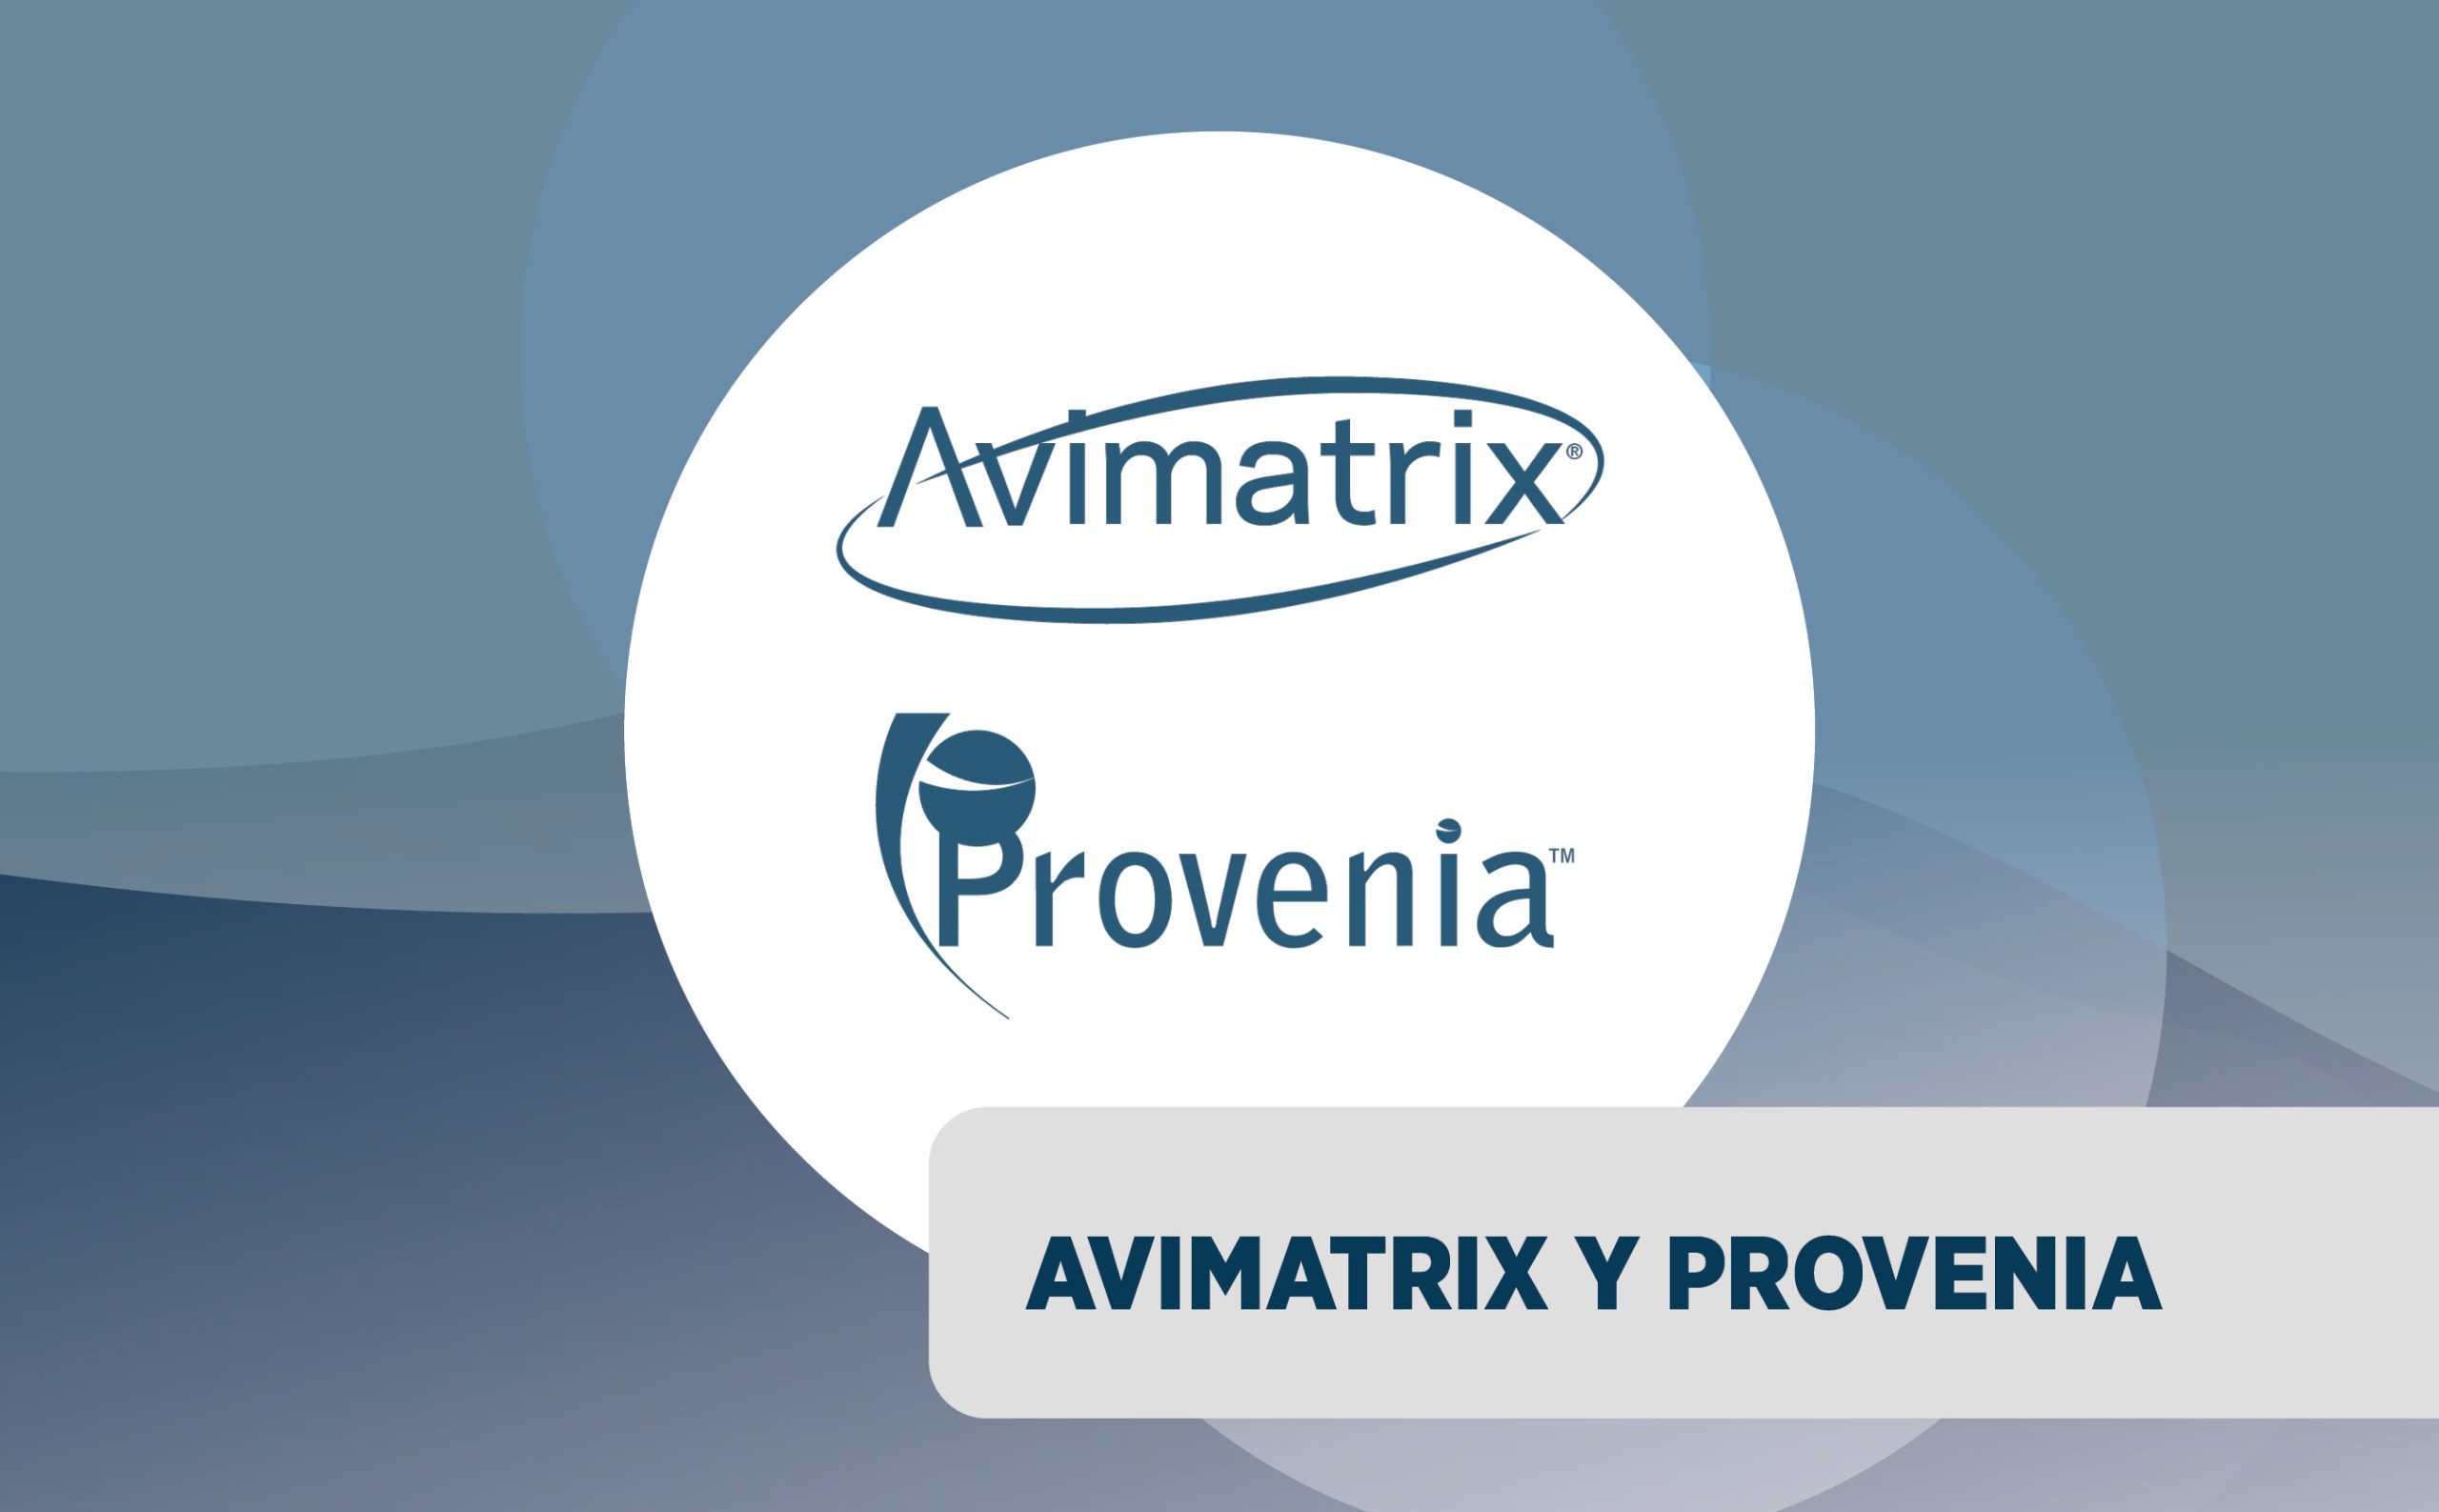 Avimatrix y Provenia